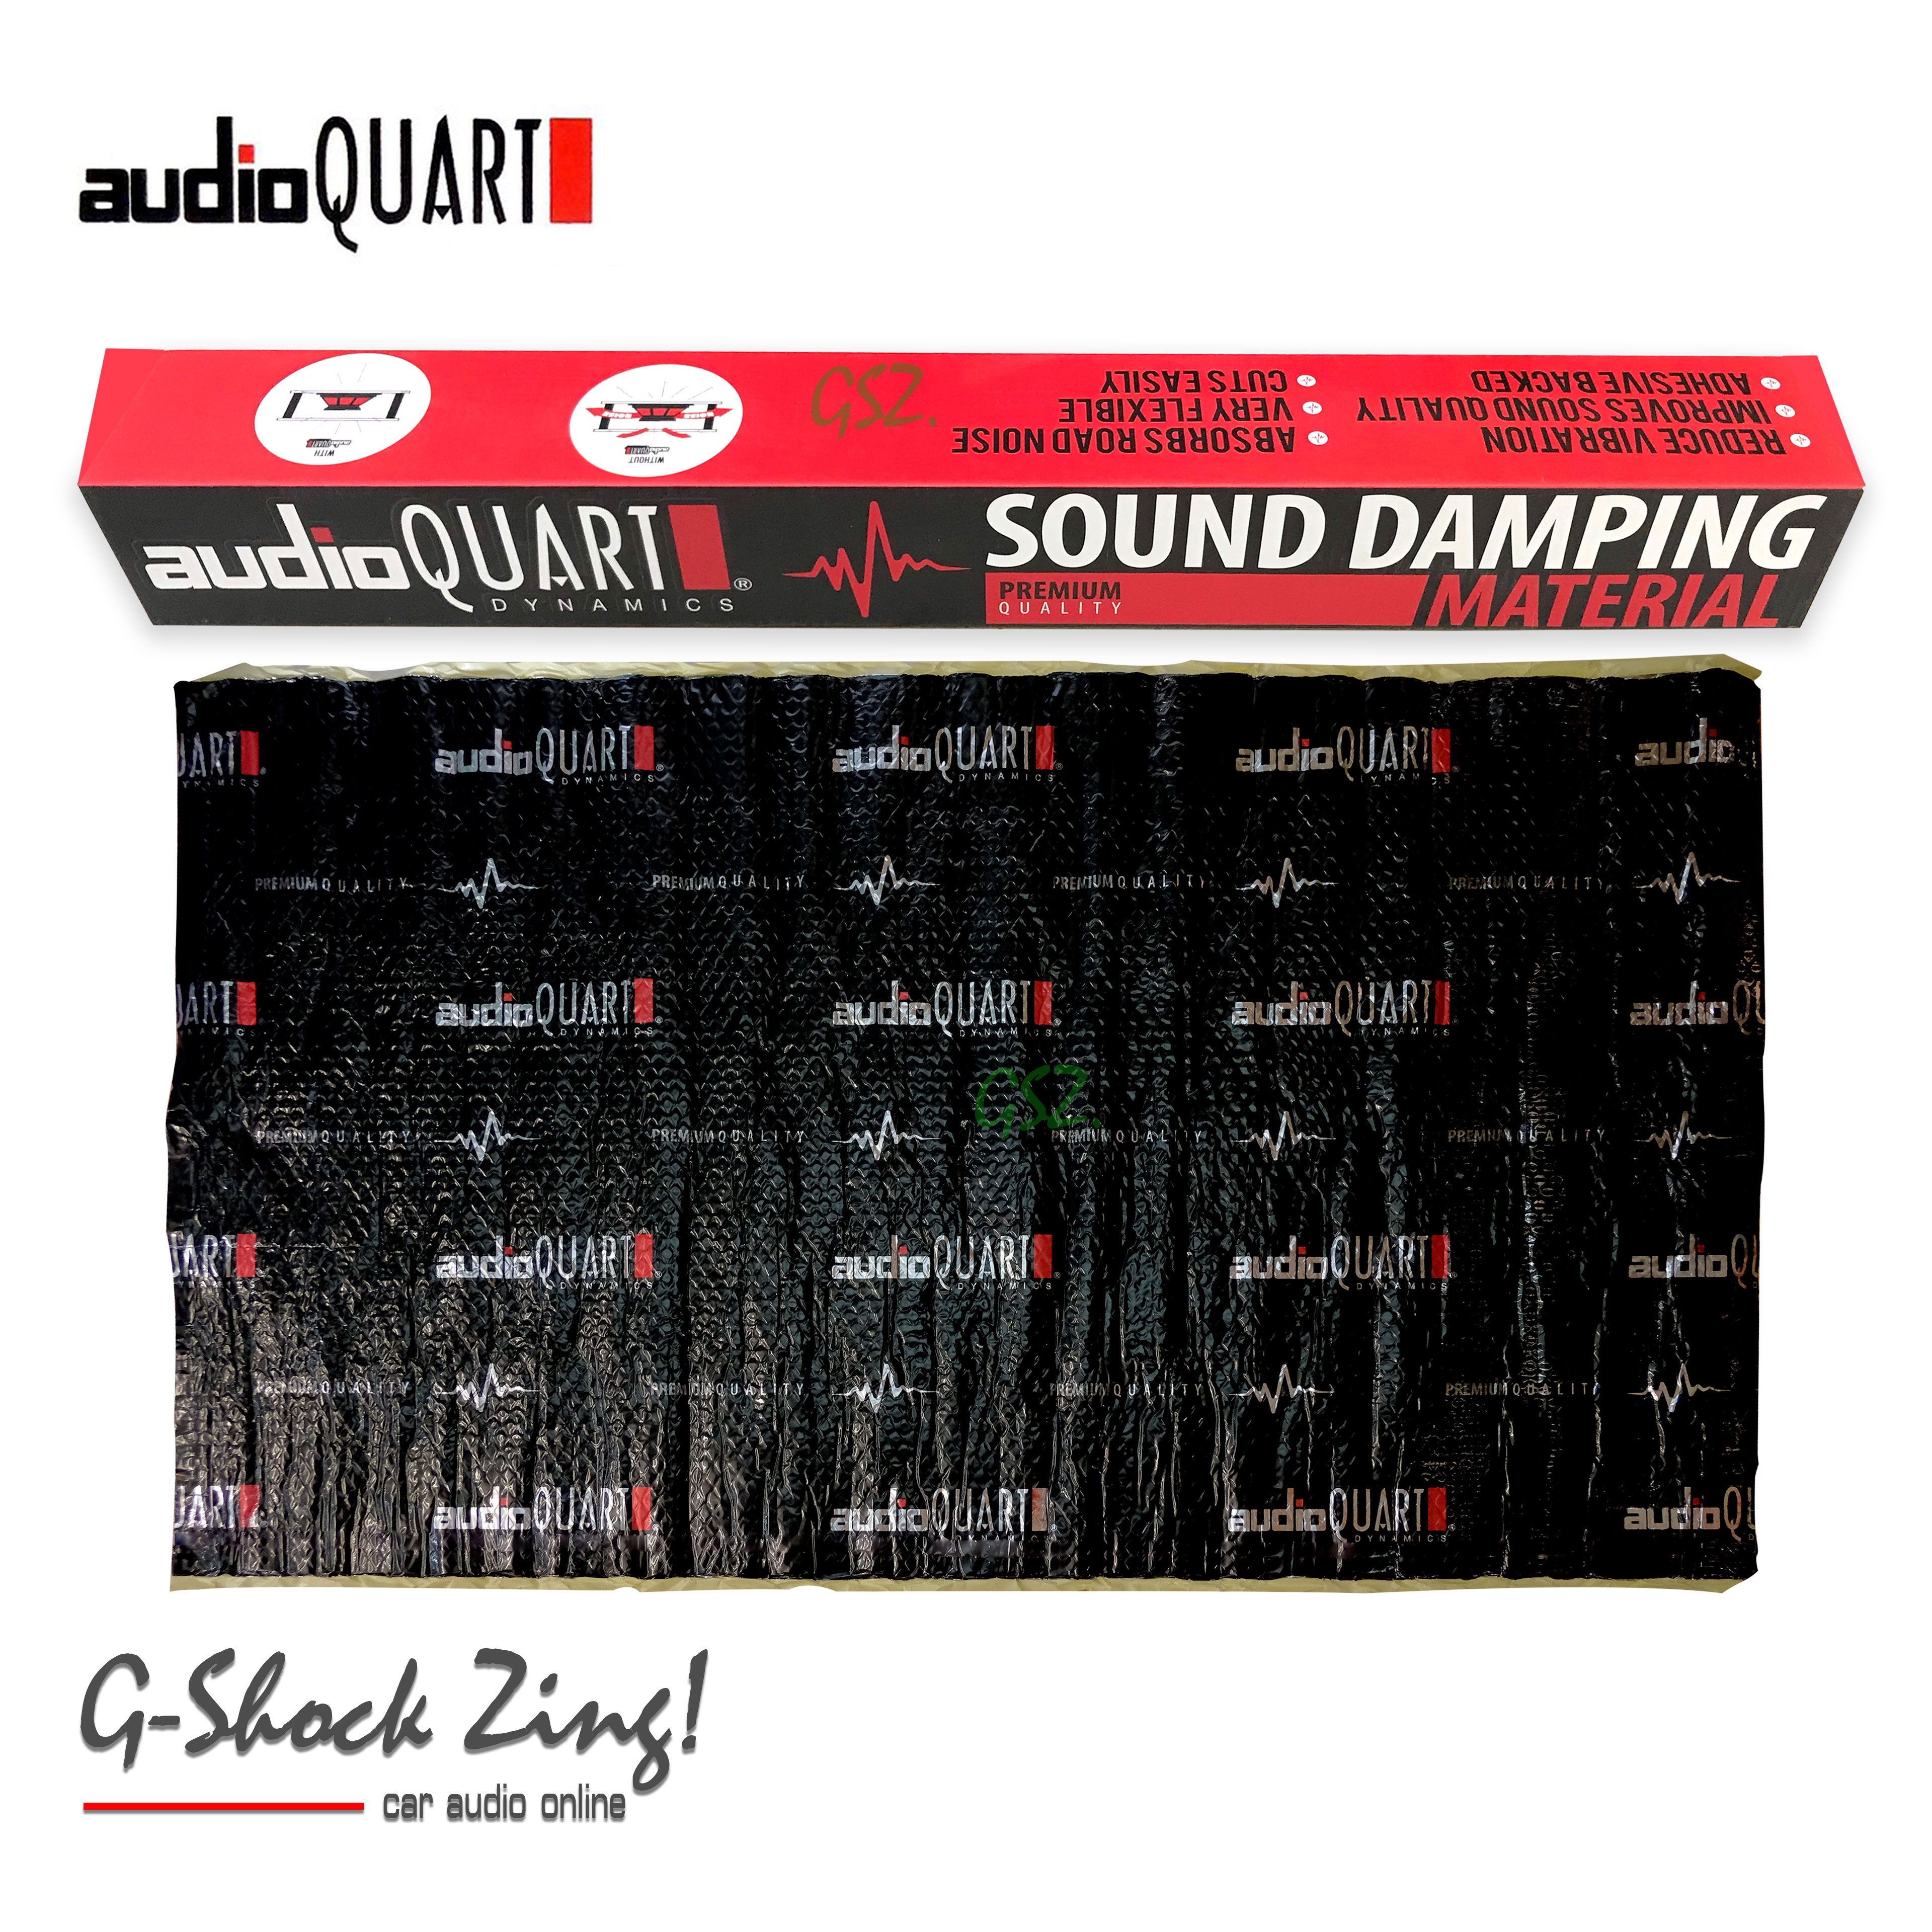 AUDIO QUART Sound Damping Premium แผ่นแดมป์ แบบฟอยล์ คุณภาพสูงเกรดพรีเมี่ยม  ติดช่วยลดการสั่น เก็บเสียง (ขนาด 100cm.x60cm) AUDIO QUART รุ่น AQ-SD01=1แผ่น.